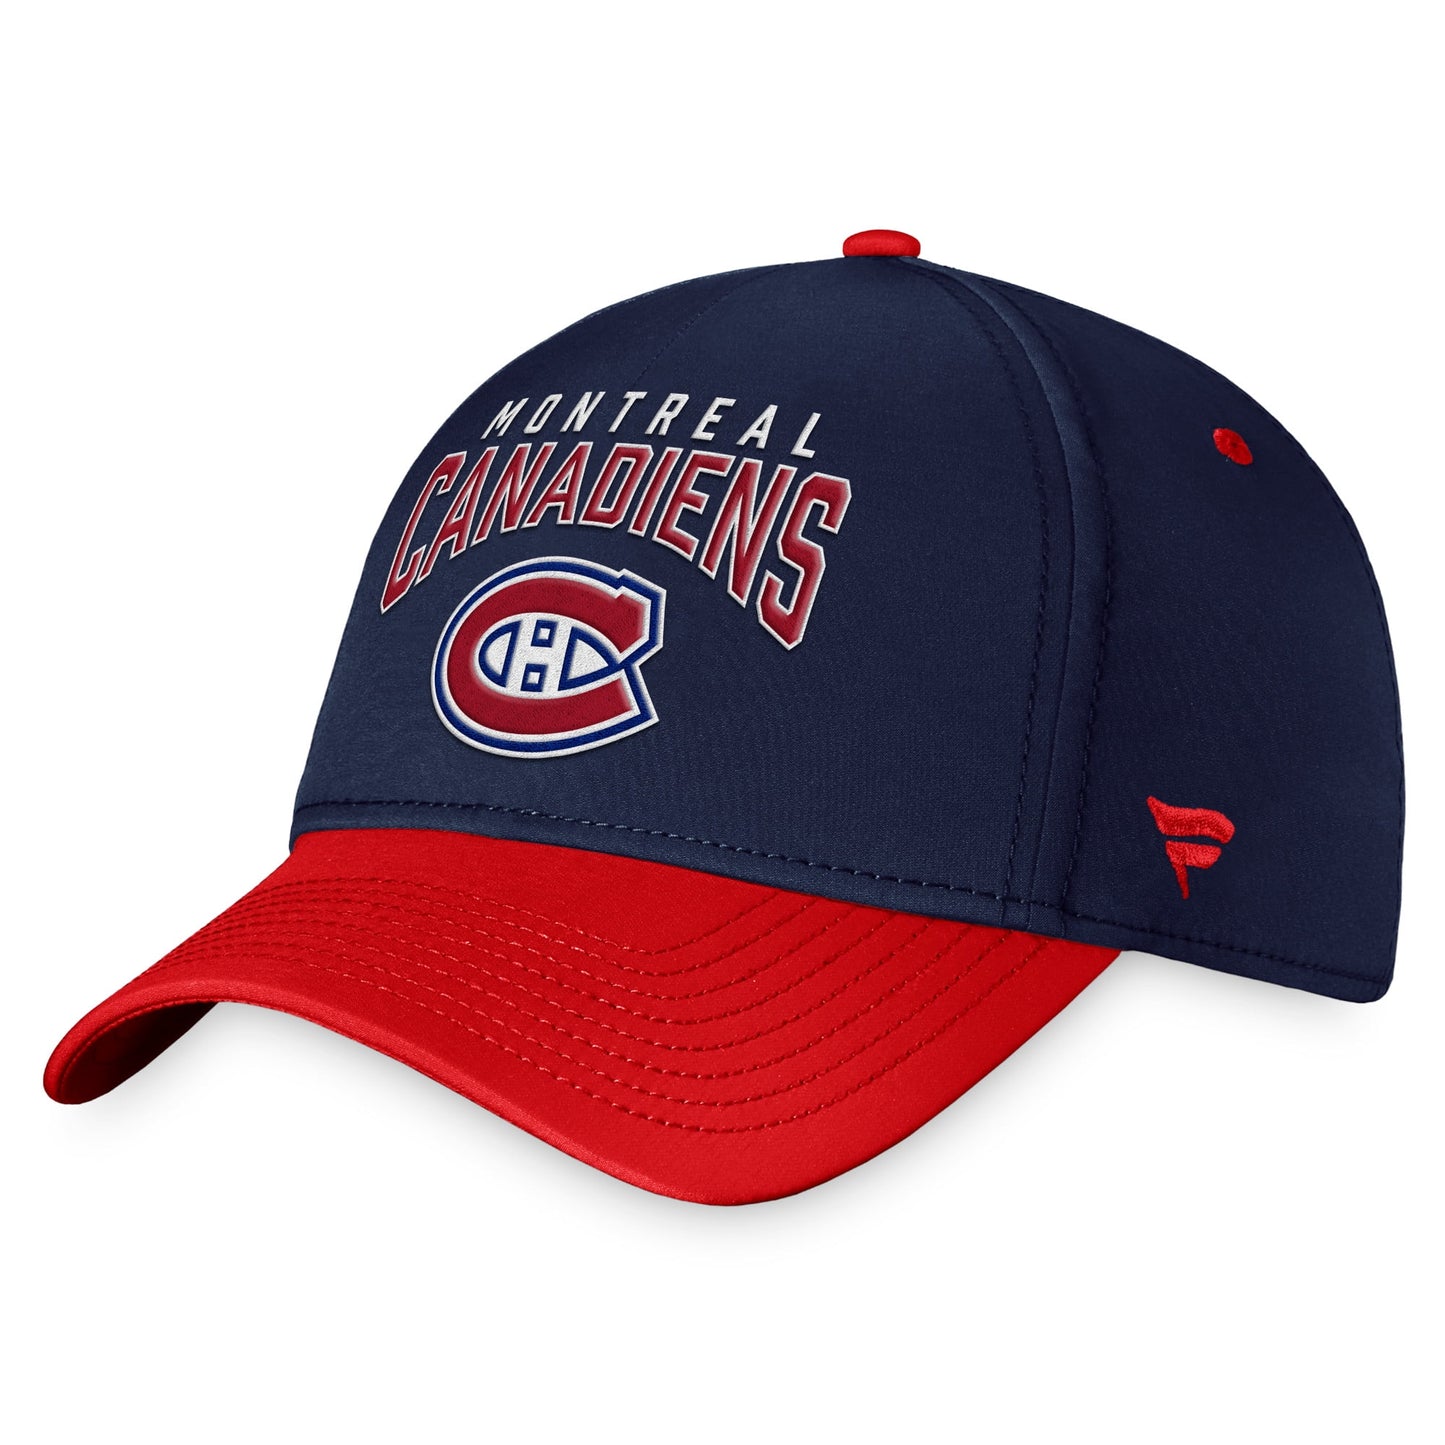 Men's Fanatics Branded Navy/Red Montreal Canadiens Fundamental 2-Tone Flex Hat